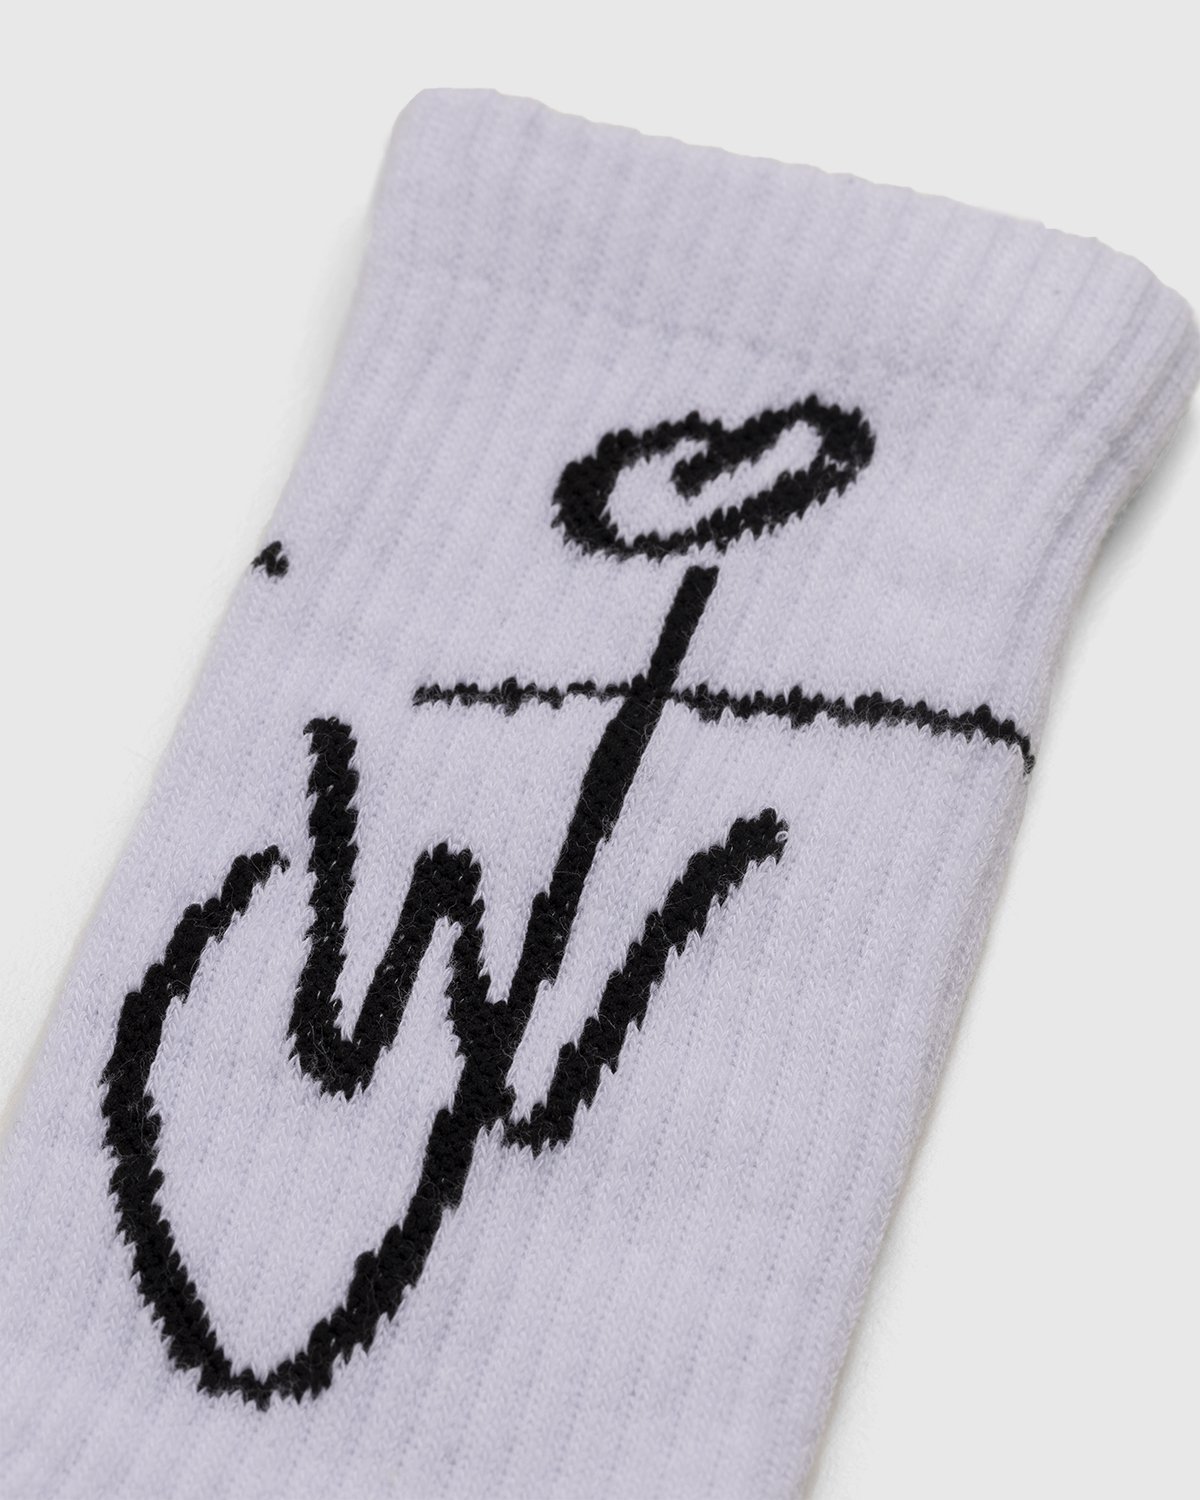 J.W. Anderson - JWA Logo Short Ankle Socks White/Black - Accessories - White - Image 3